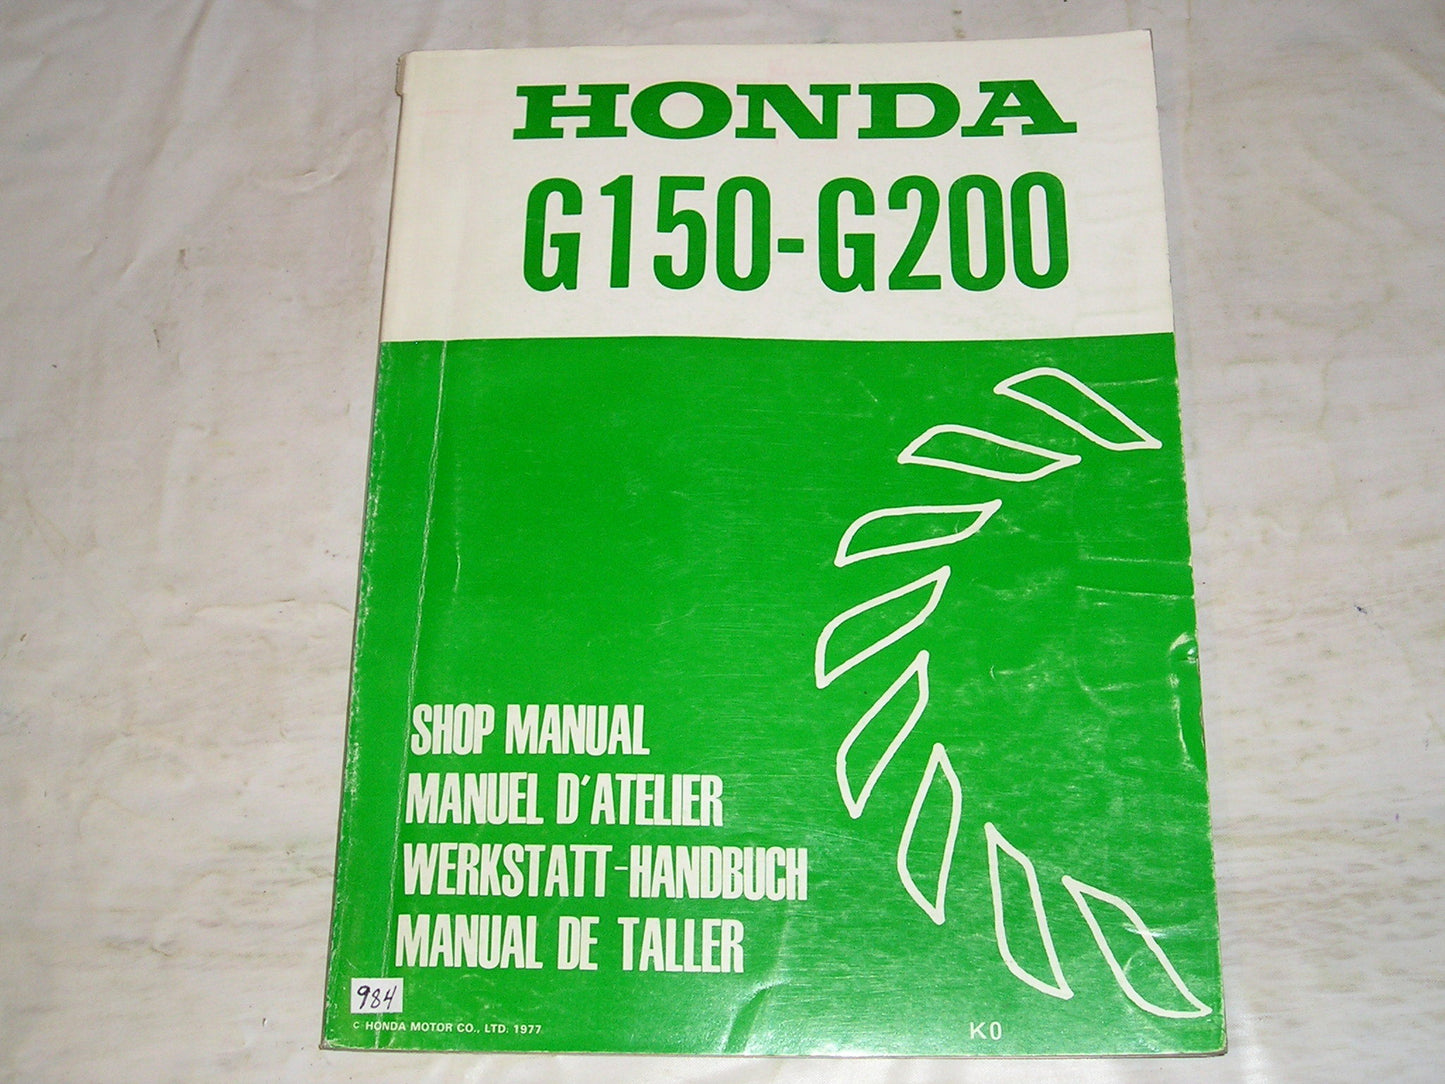 HONDA G150  G200  K0 1978  General Purpose Engine Service Manual  6688301  #984